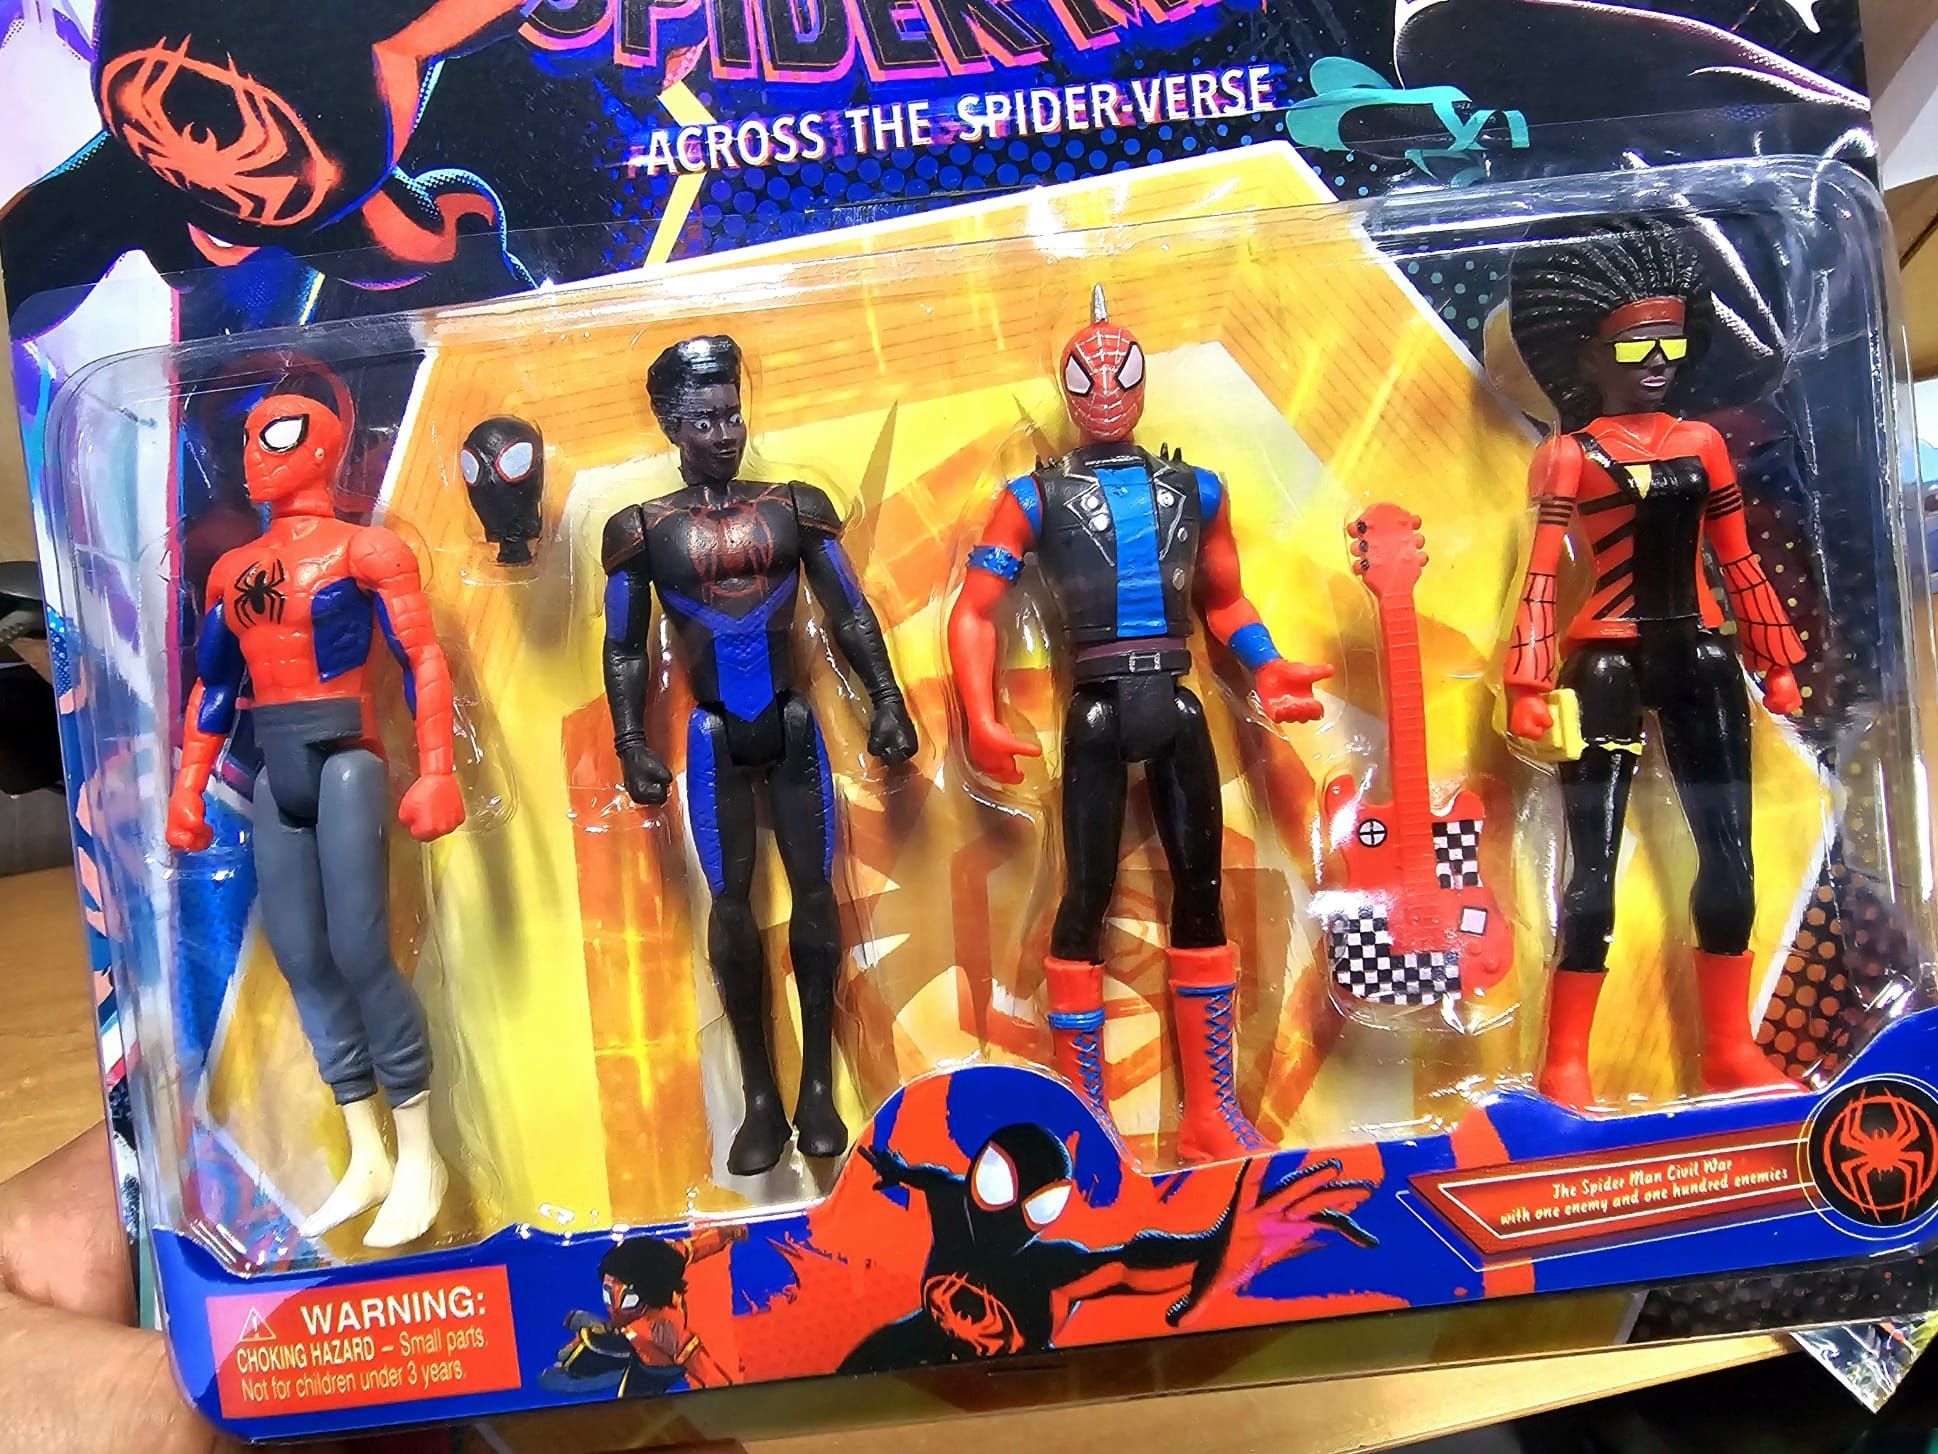 Zestaw figurek figurki Spider-Man nowe zabawki